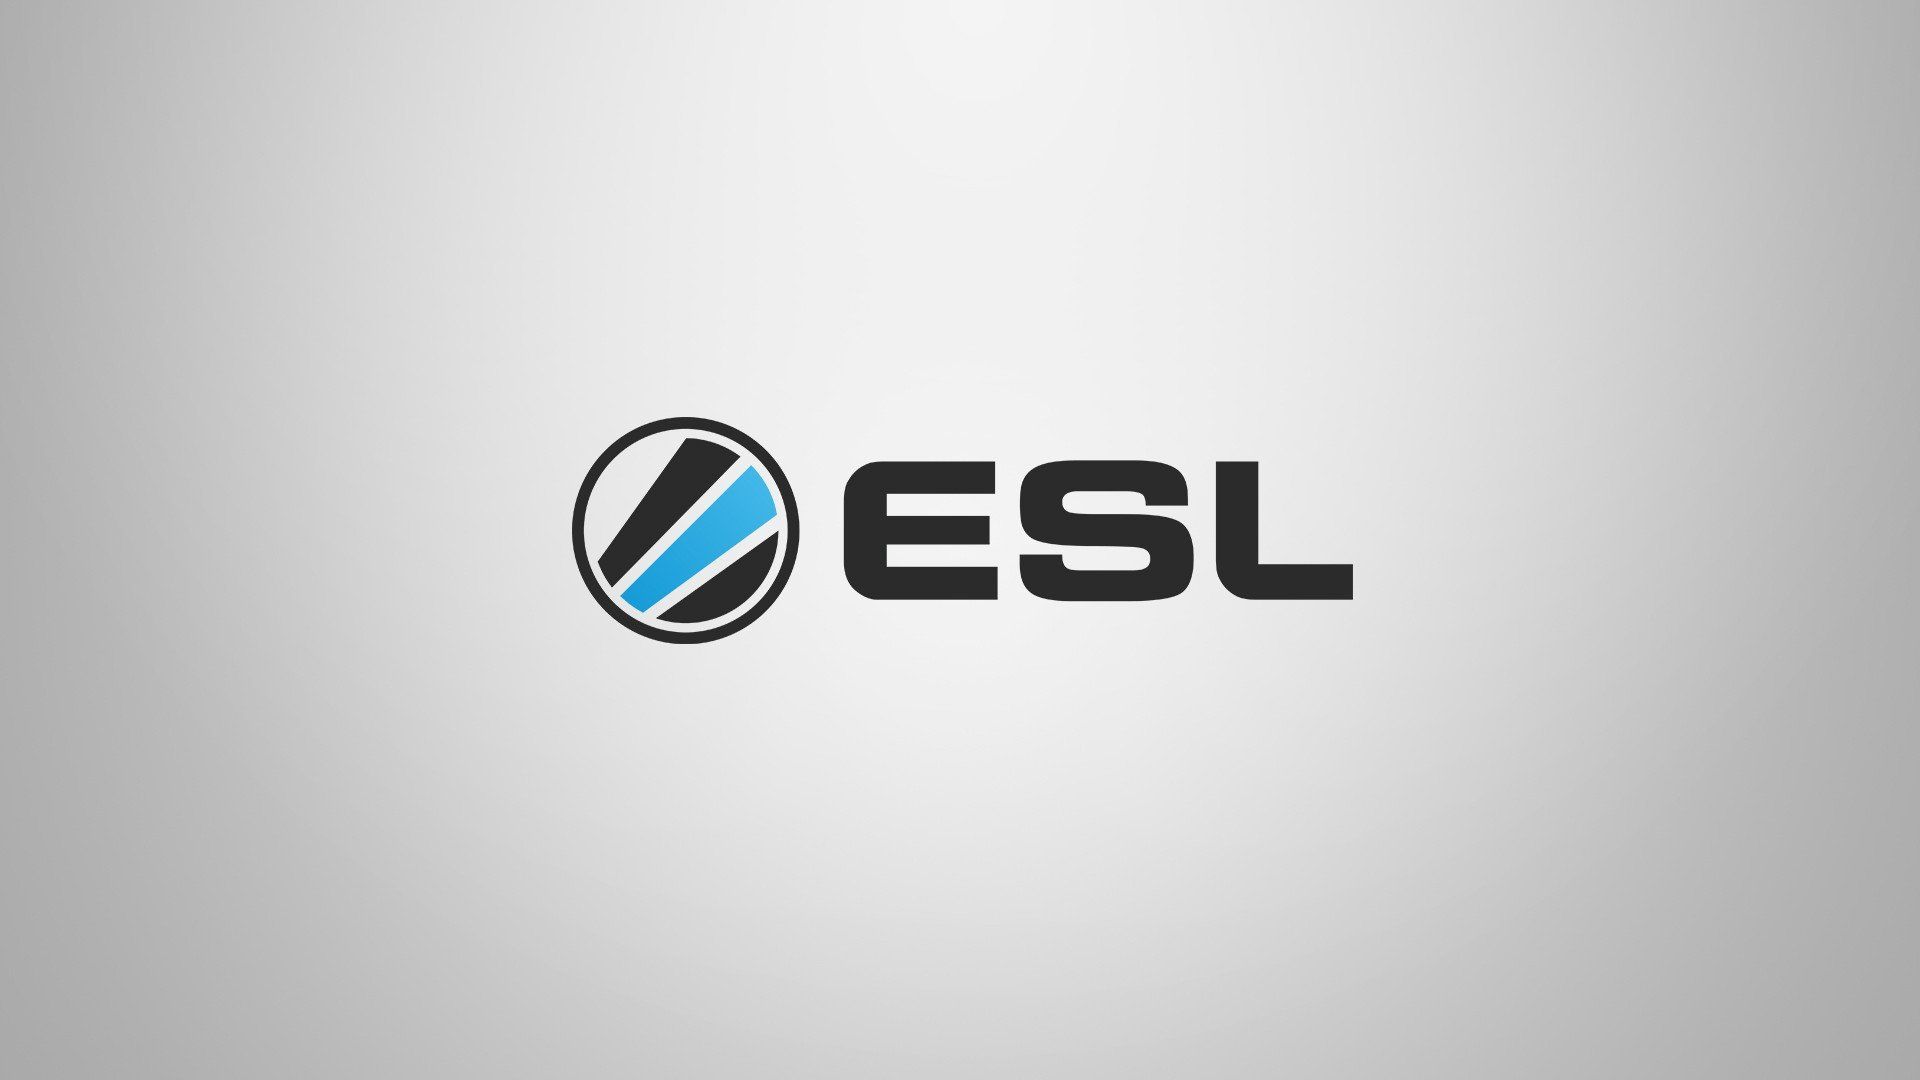 ESL, Esport, IEM, Electronic Sports League Wallpaper HD / Desktop and Mobile Background